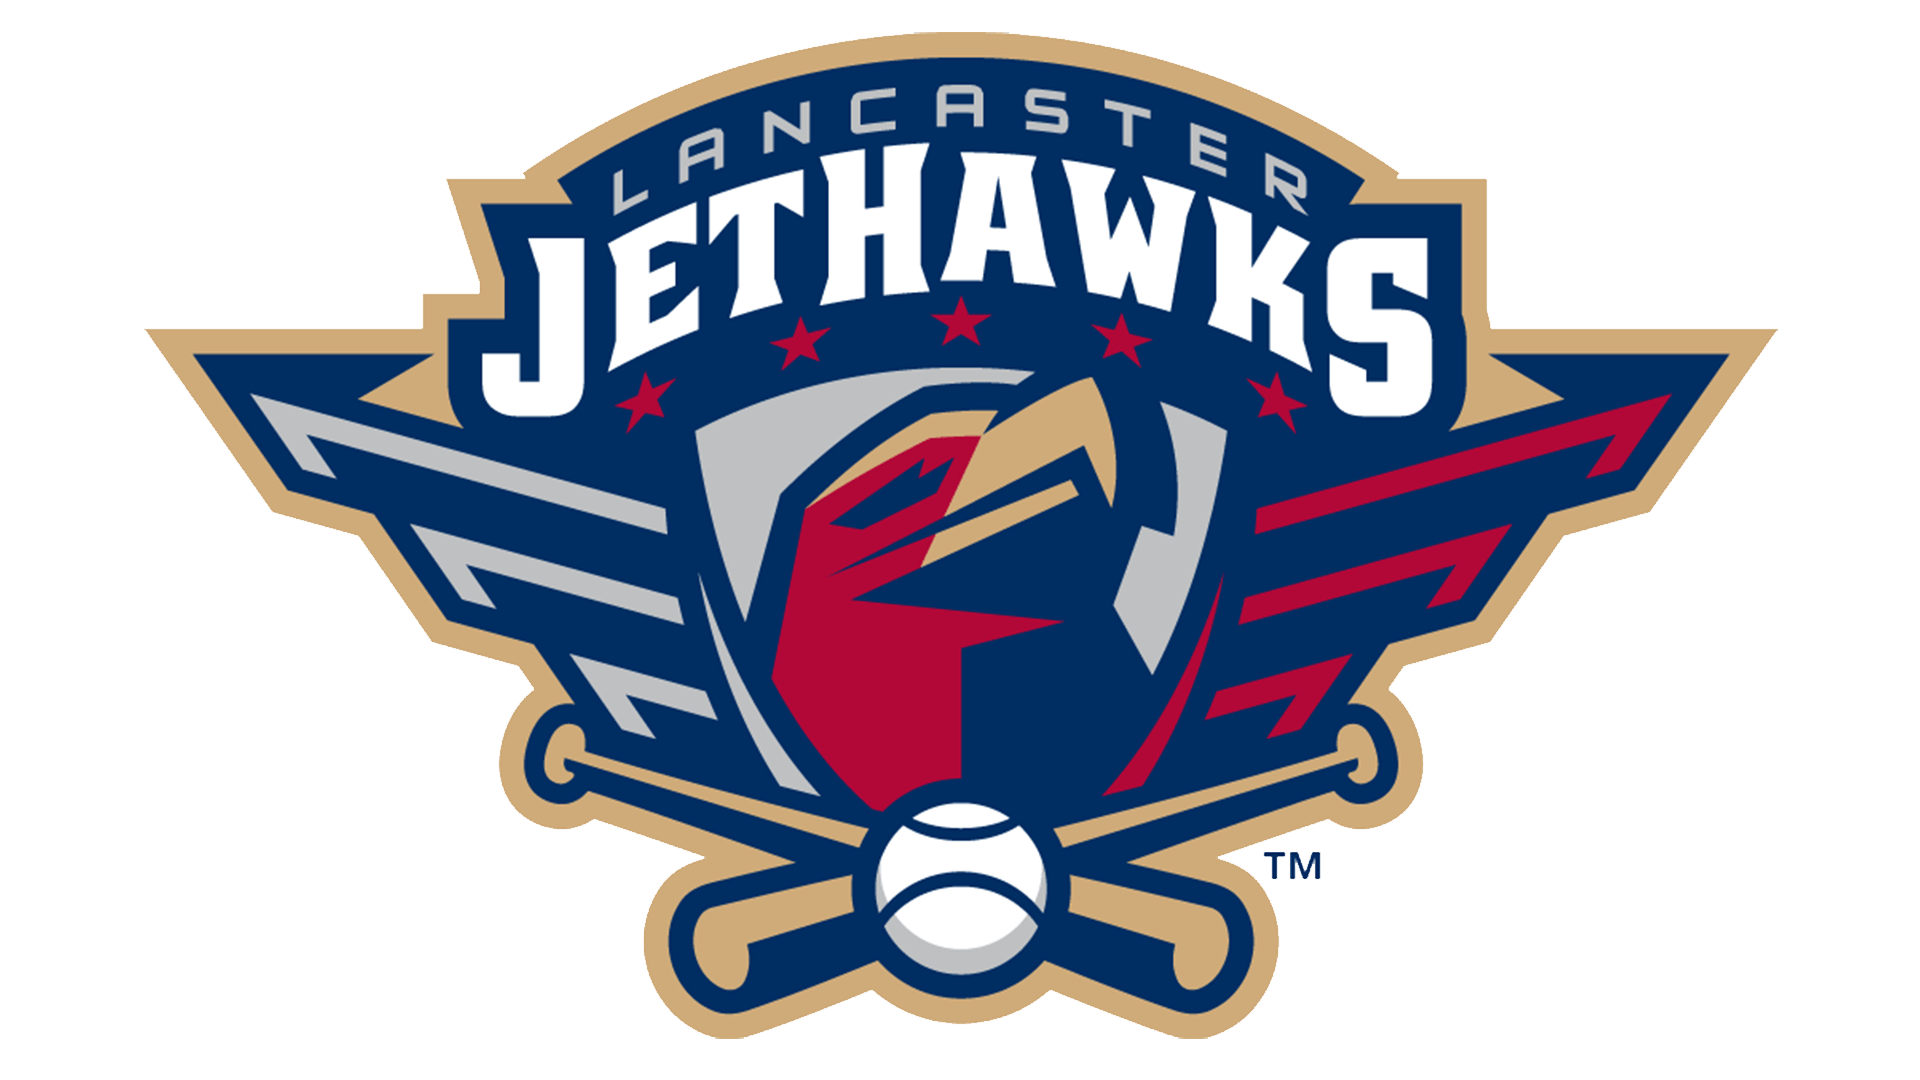 JetHawks Logo - Lancaster Jethawks logo, Lancaster Jethawks Symbol, Meaning, History